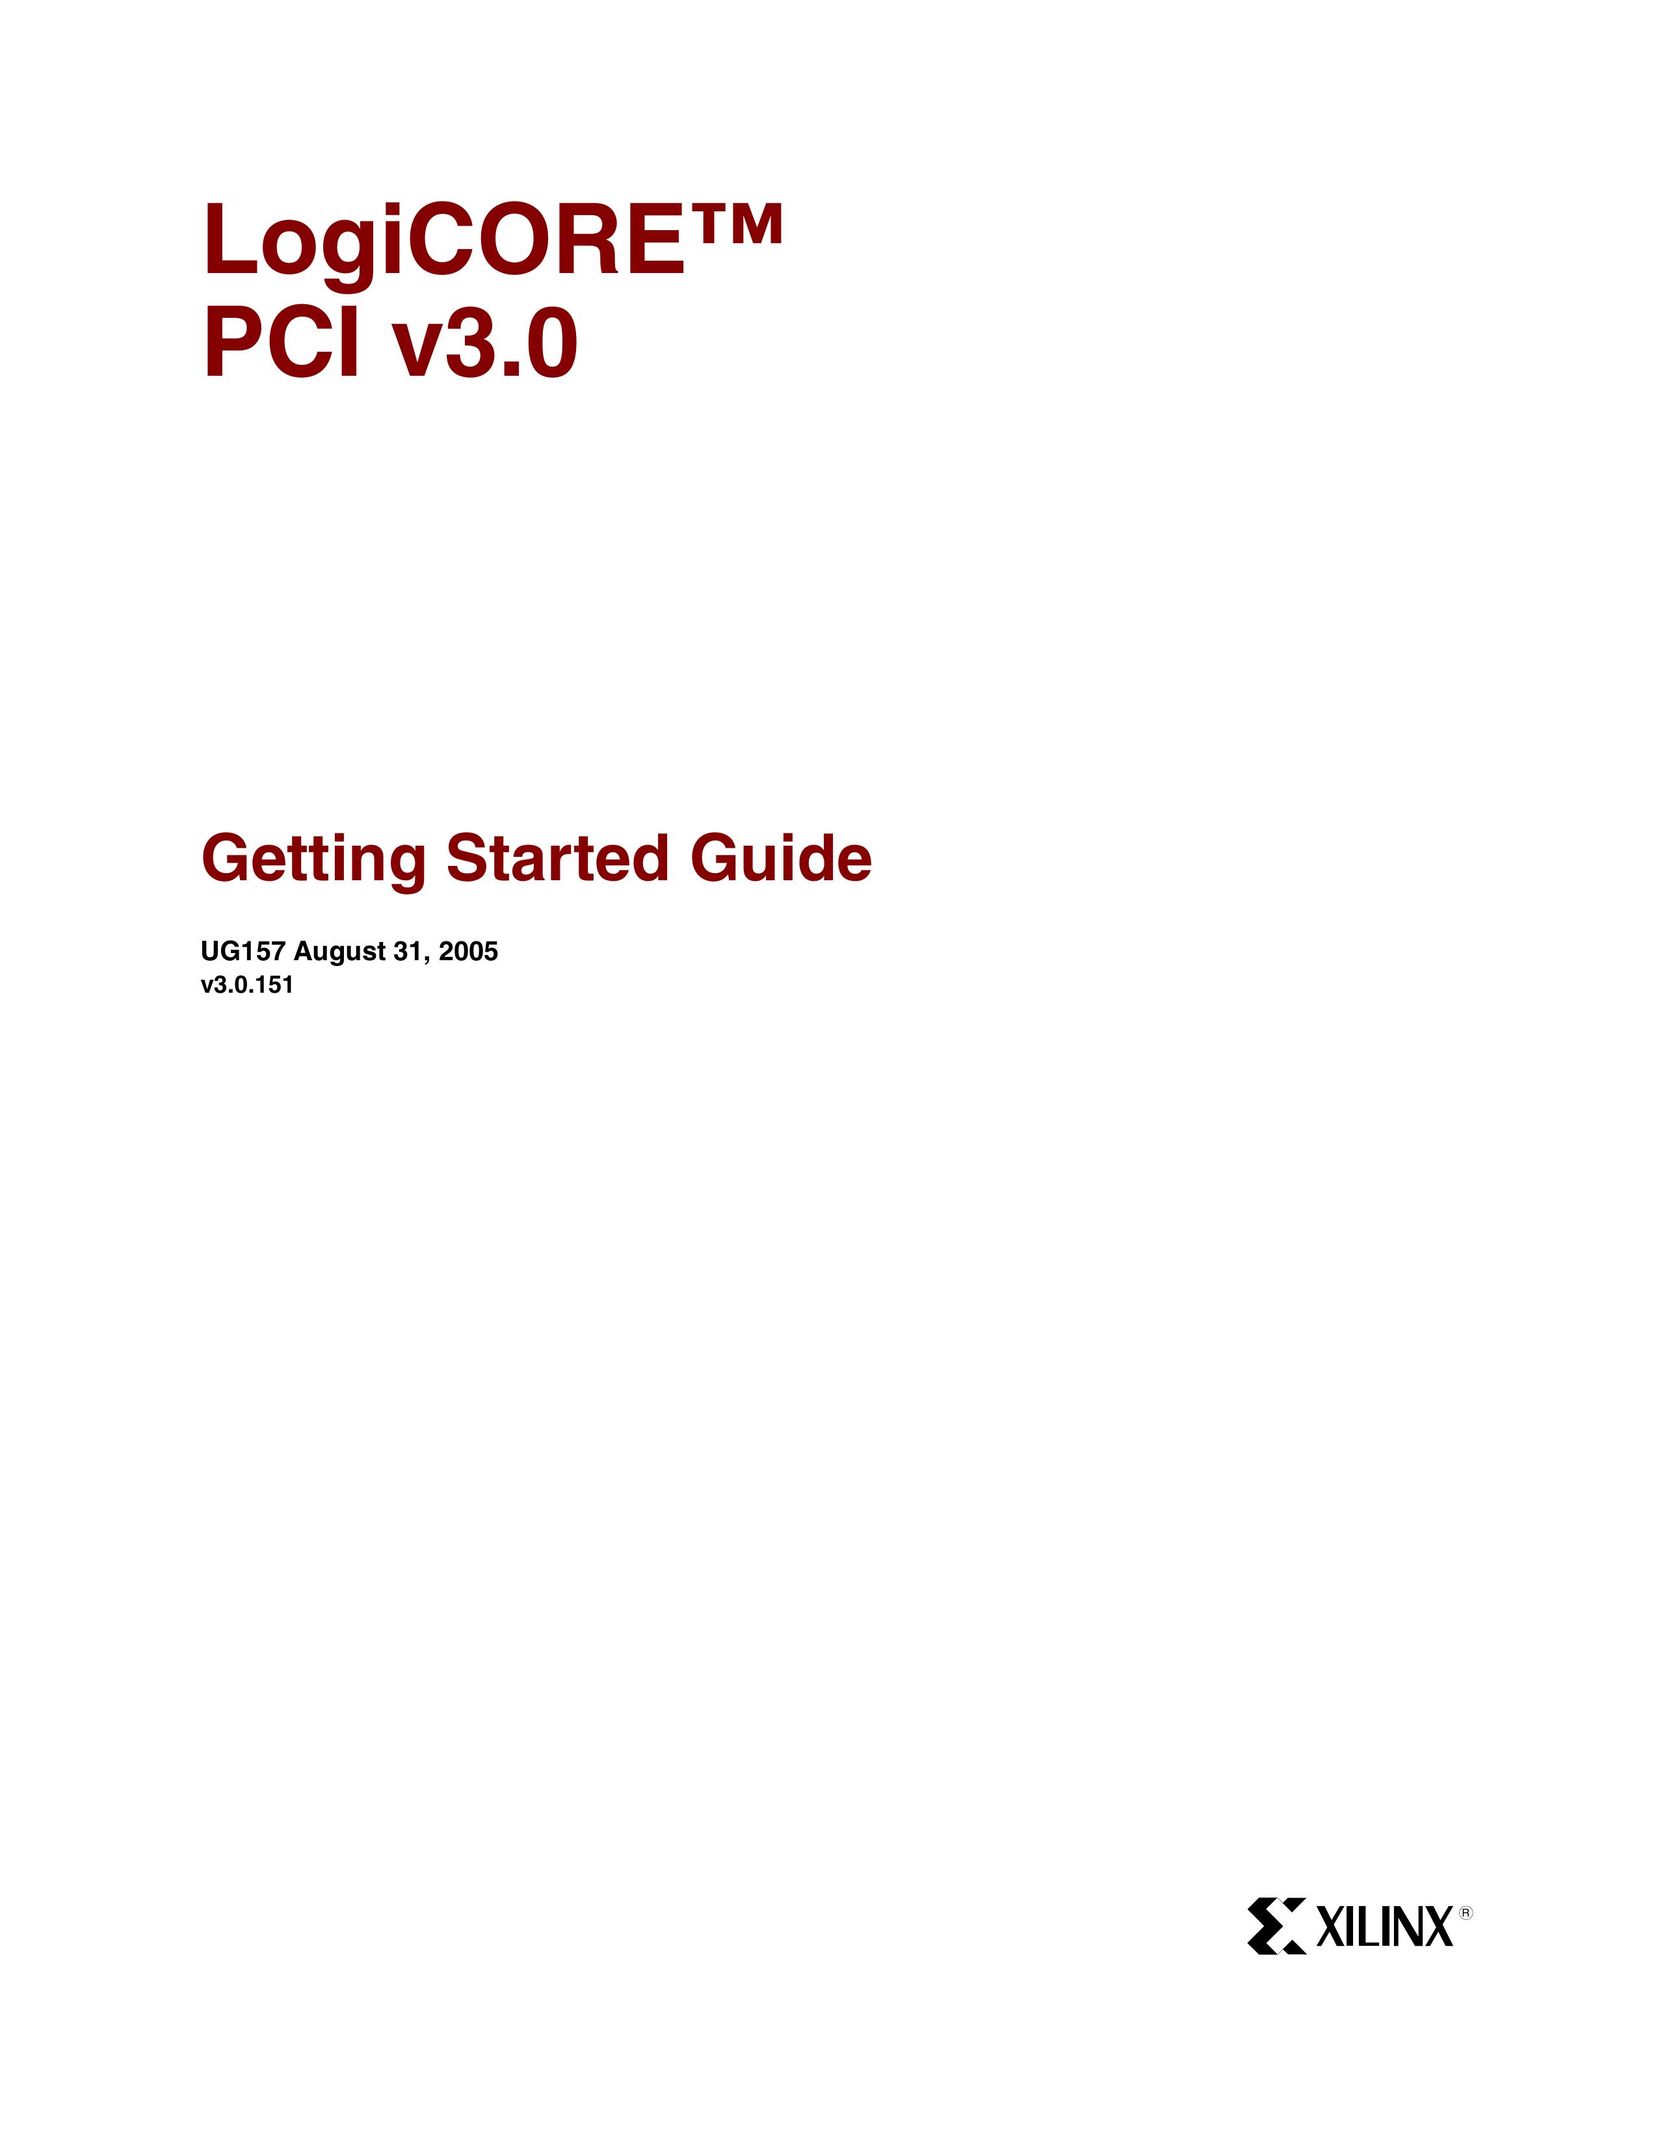 Xilinx PCI v3.0 Switch User Manual